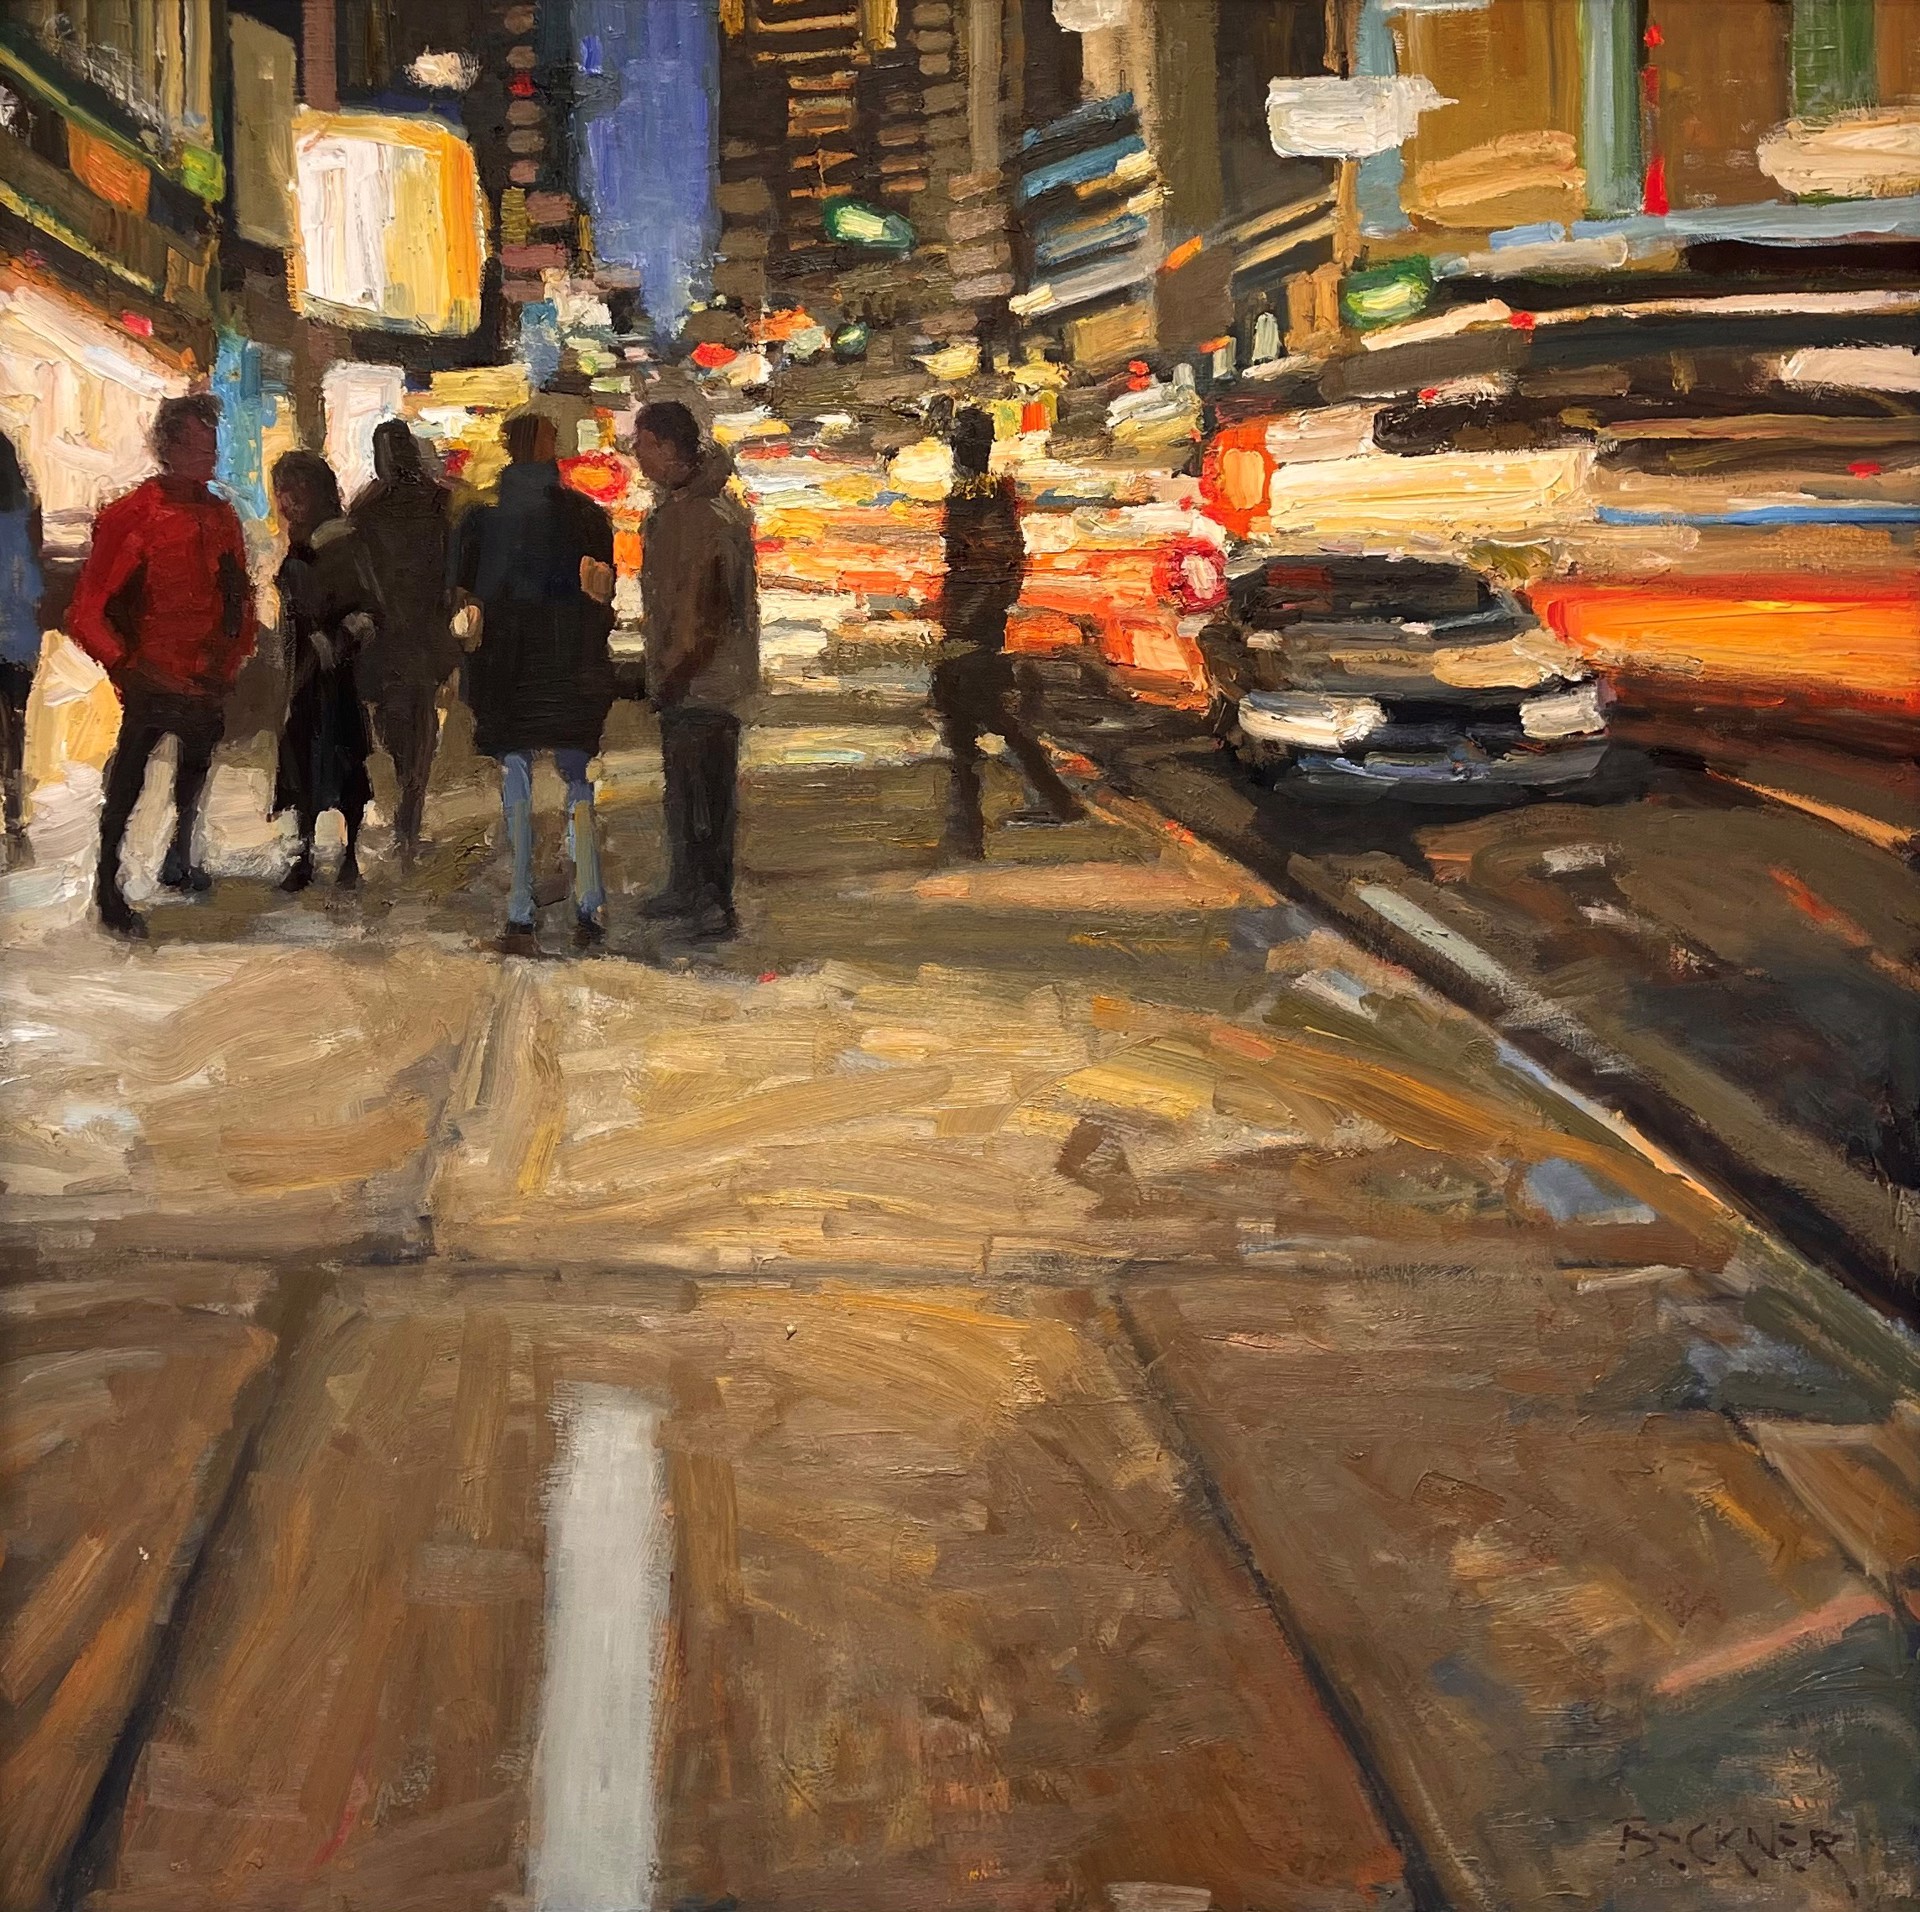 Sidewalk Lights by Jim Beckner